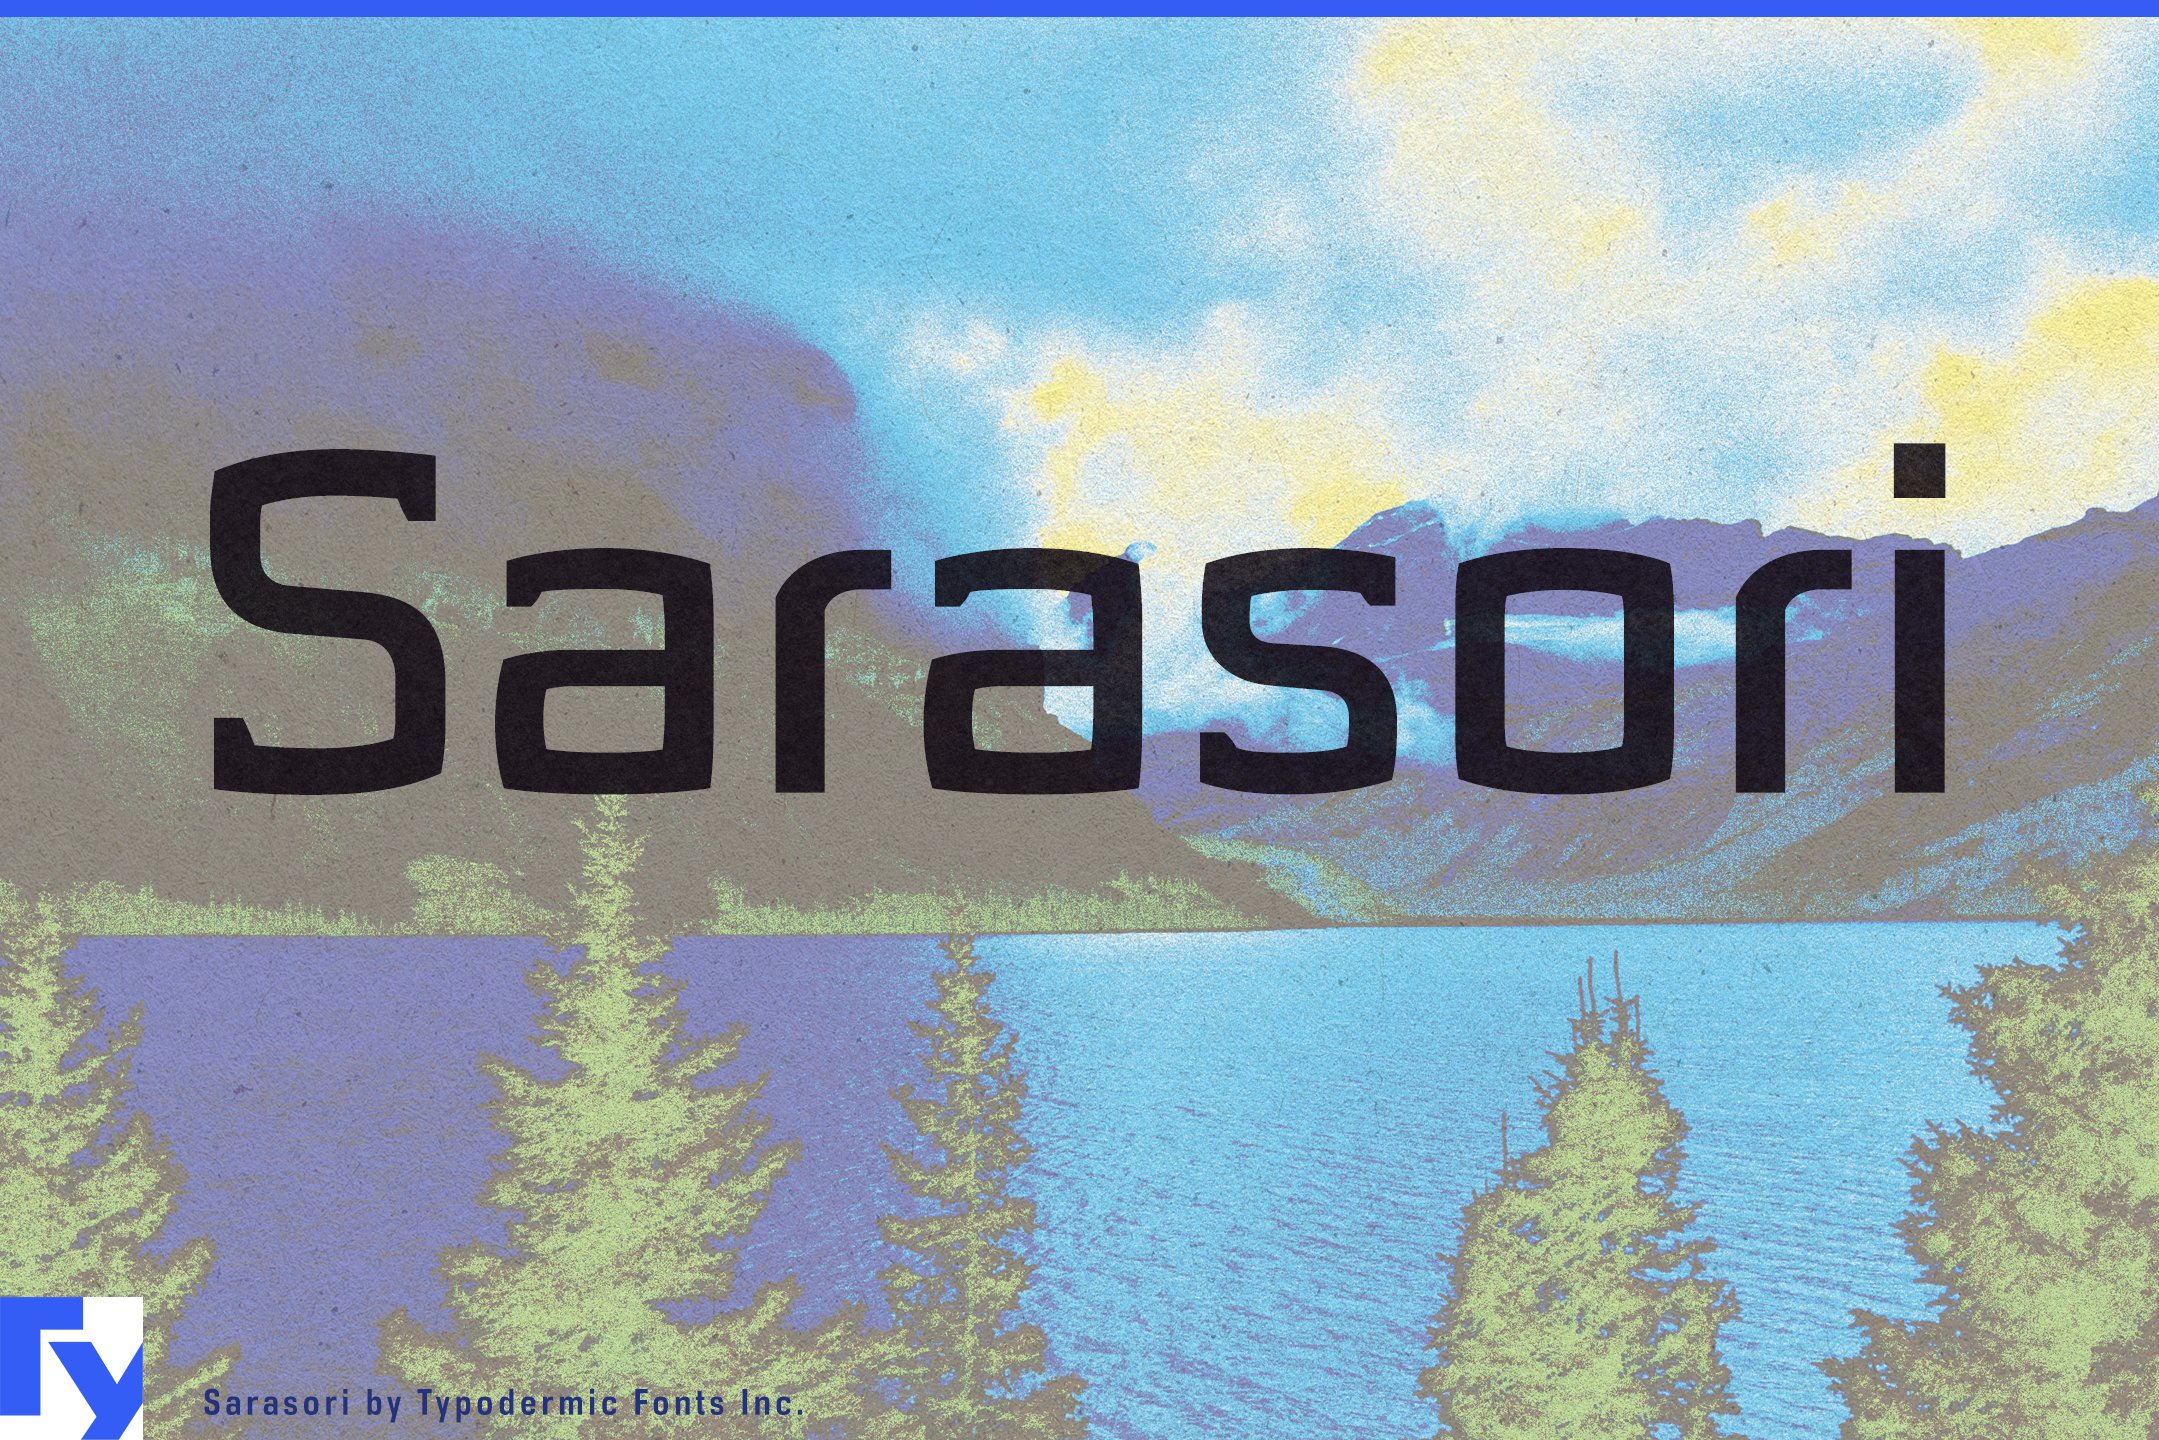 Sarasori cover image.